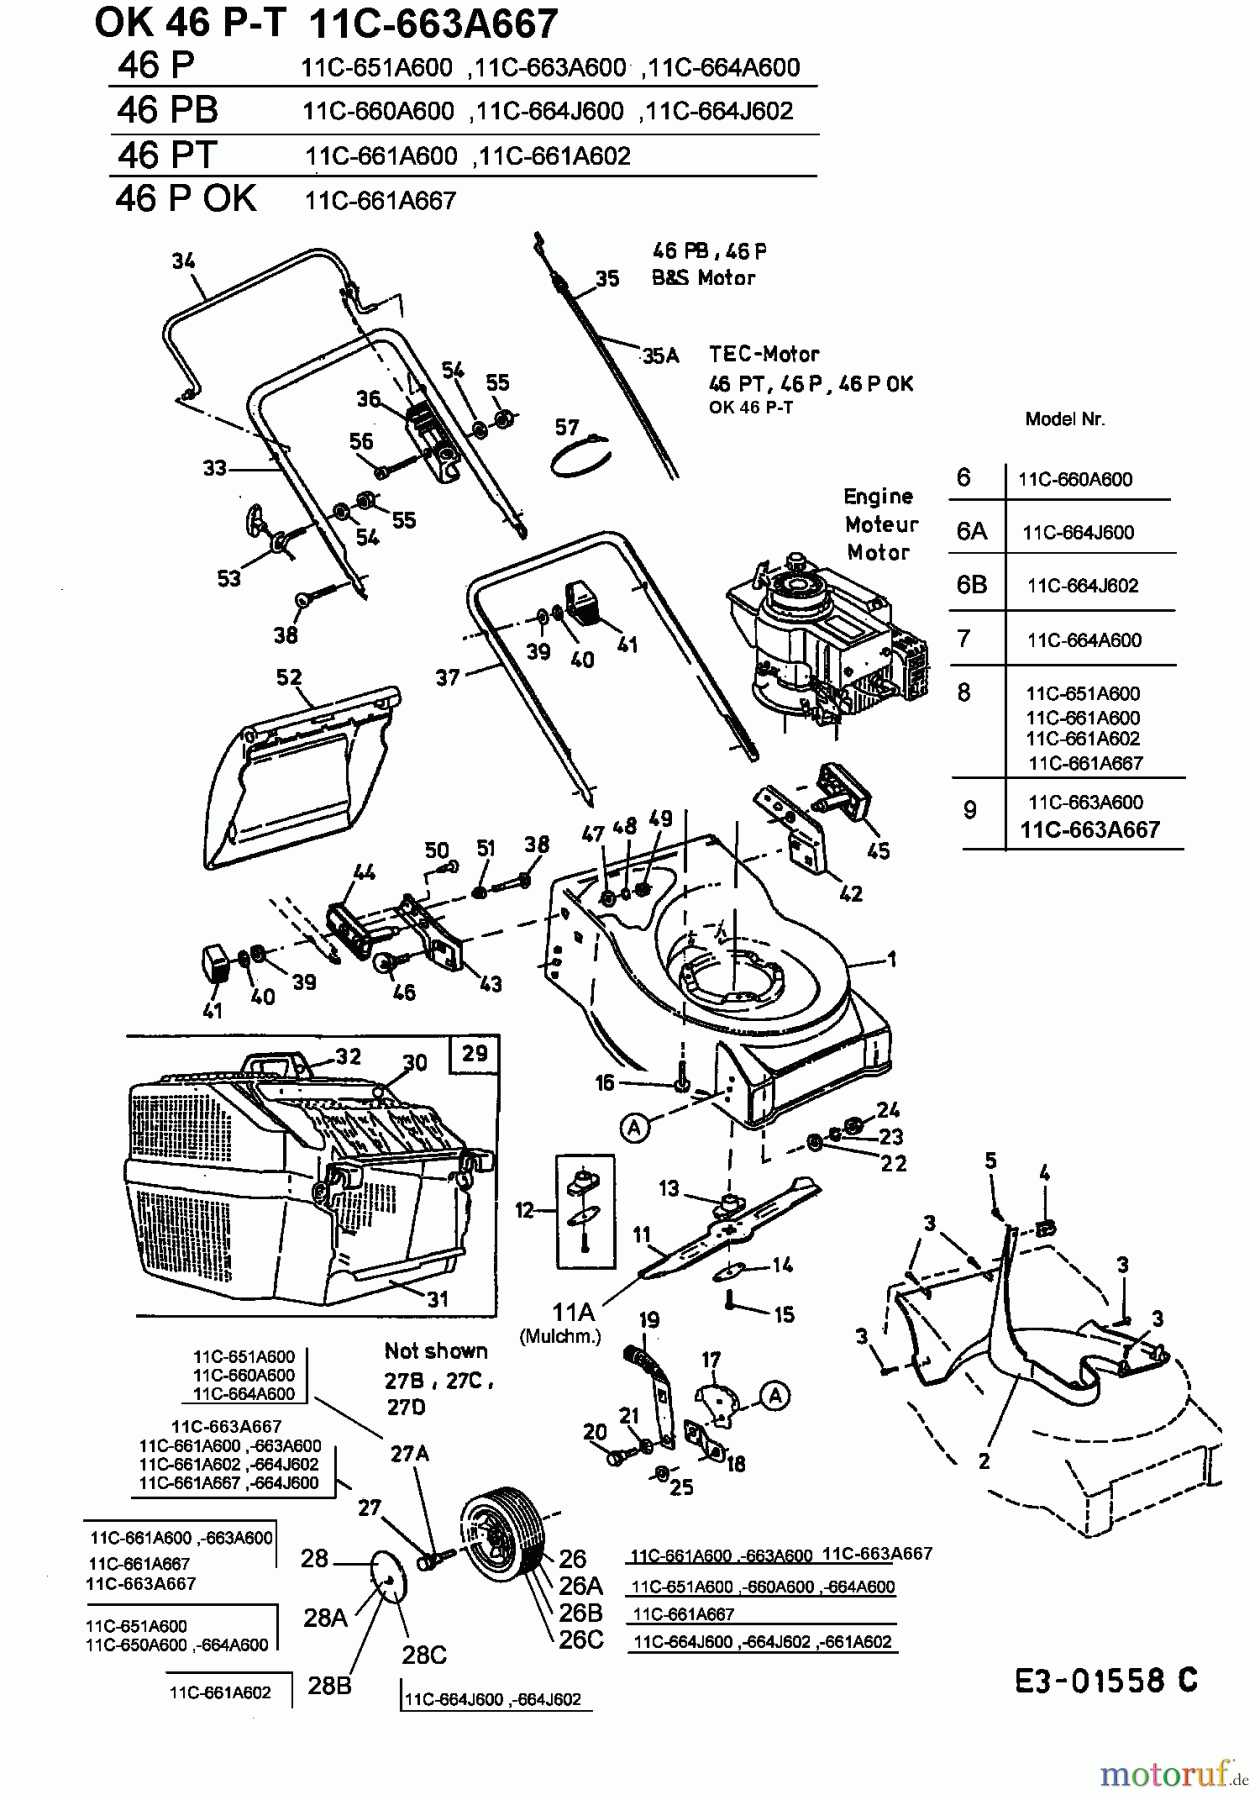  Ok Motormäher 46 PT 11C-661A667  (2003) Grundgerät